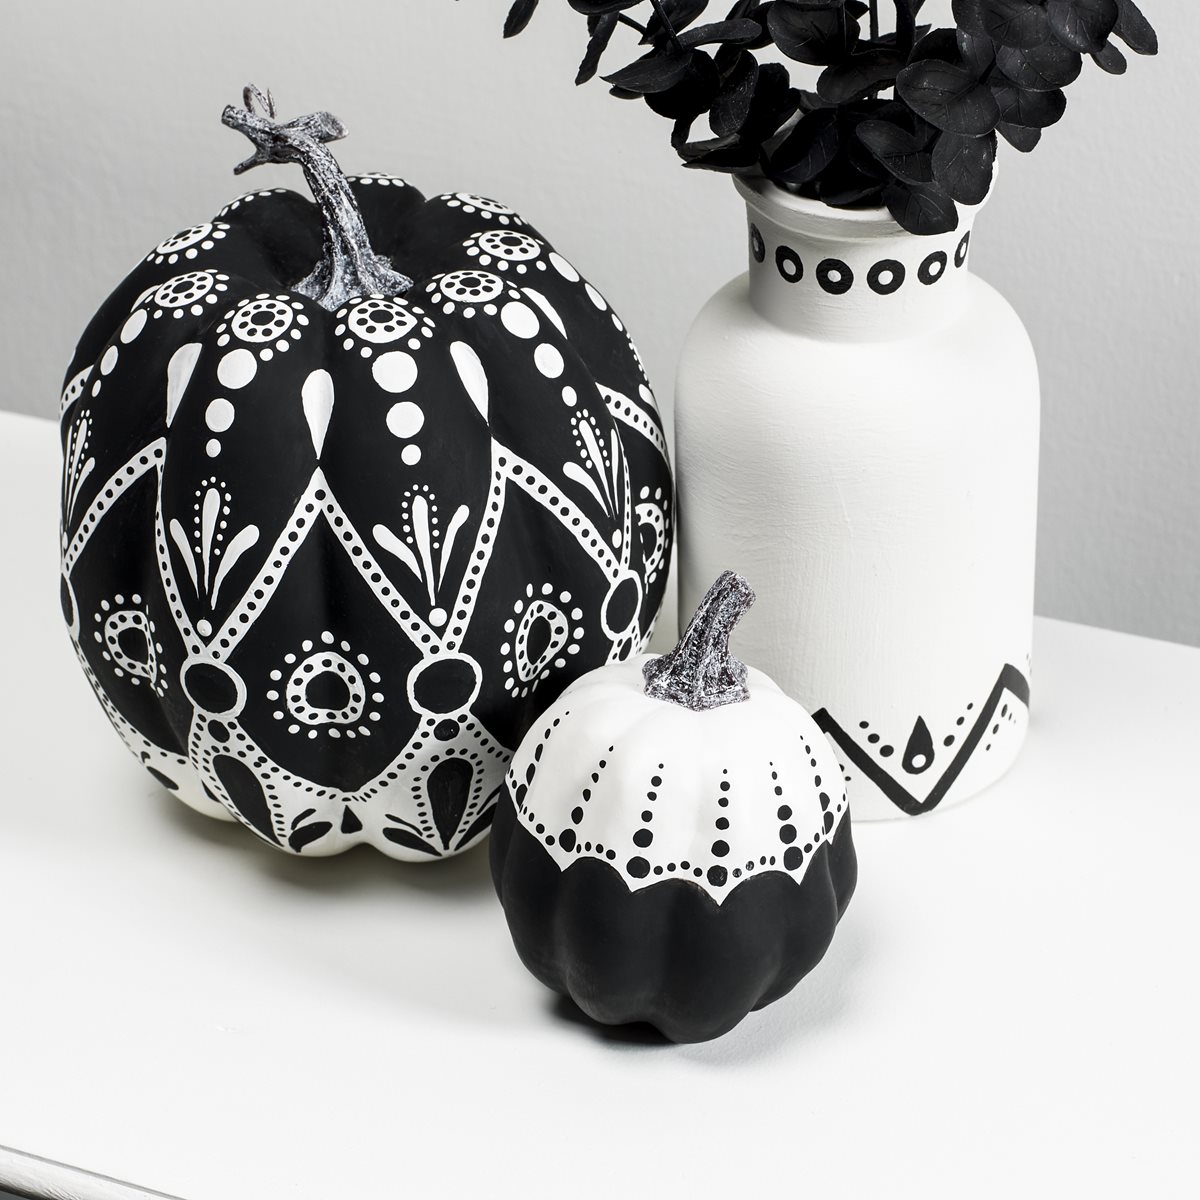 Black & White Mandala Pumpkins, Vase & Tray